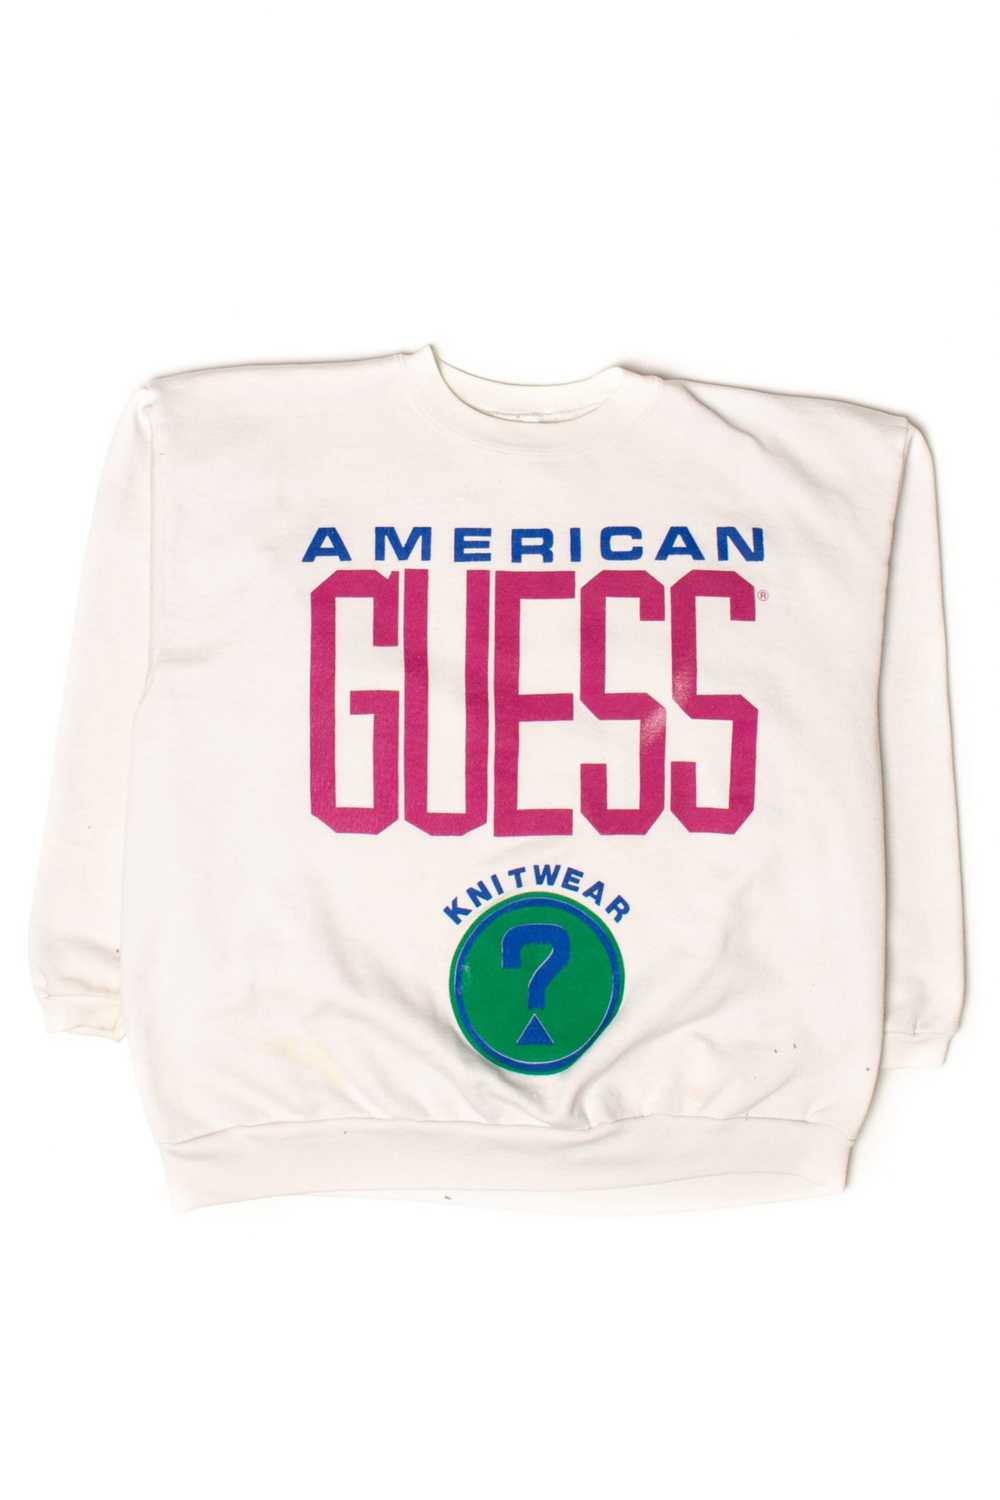 Vintage American Guess Knitwear Sweatshirt (1990s) - image 1